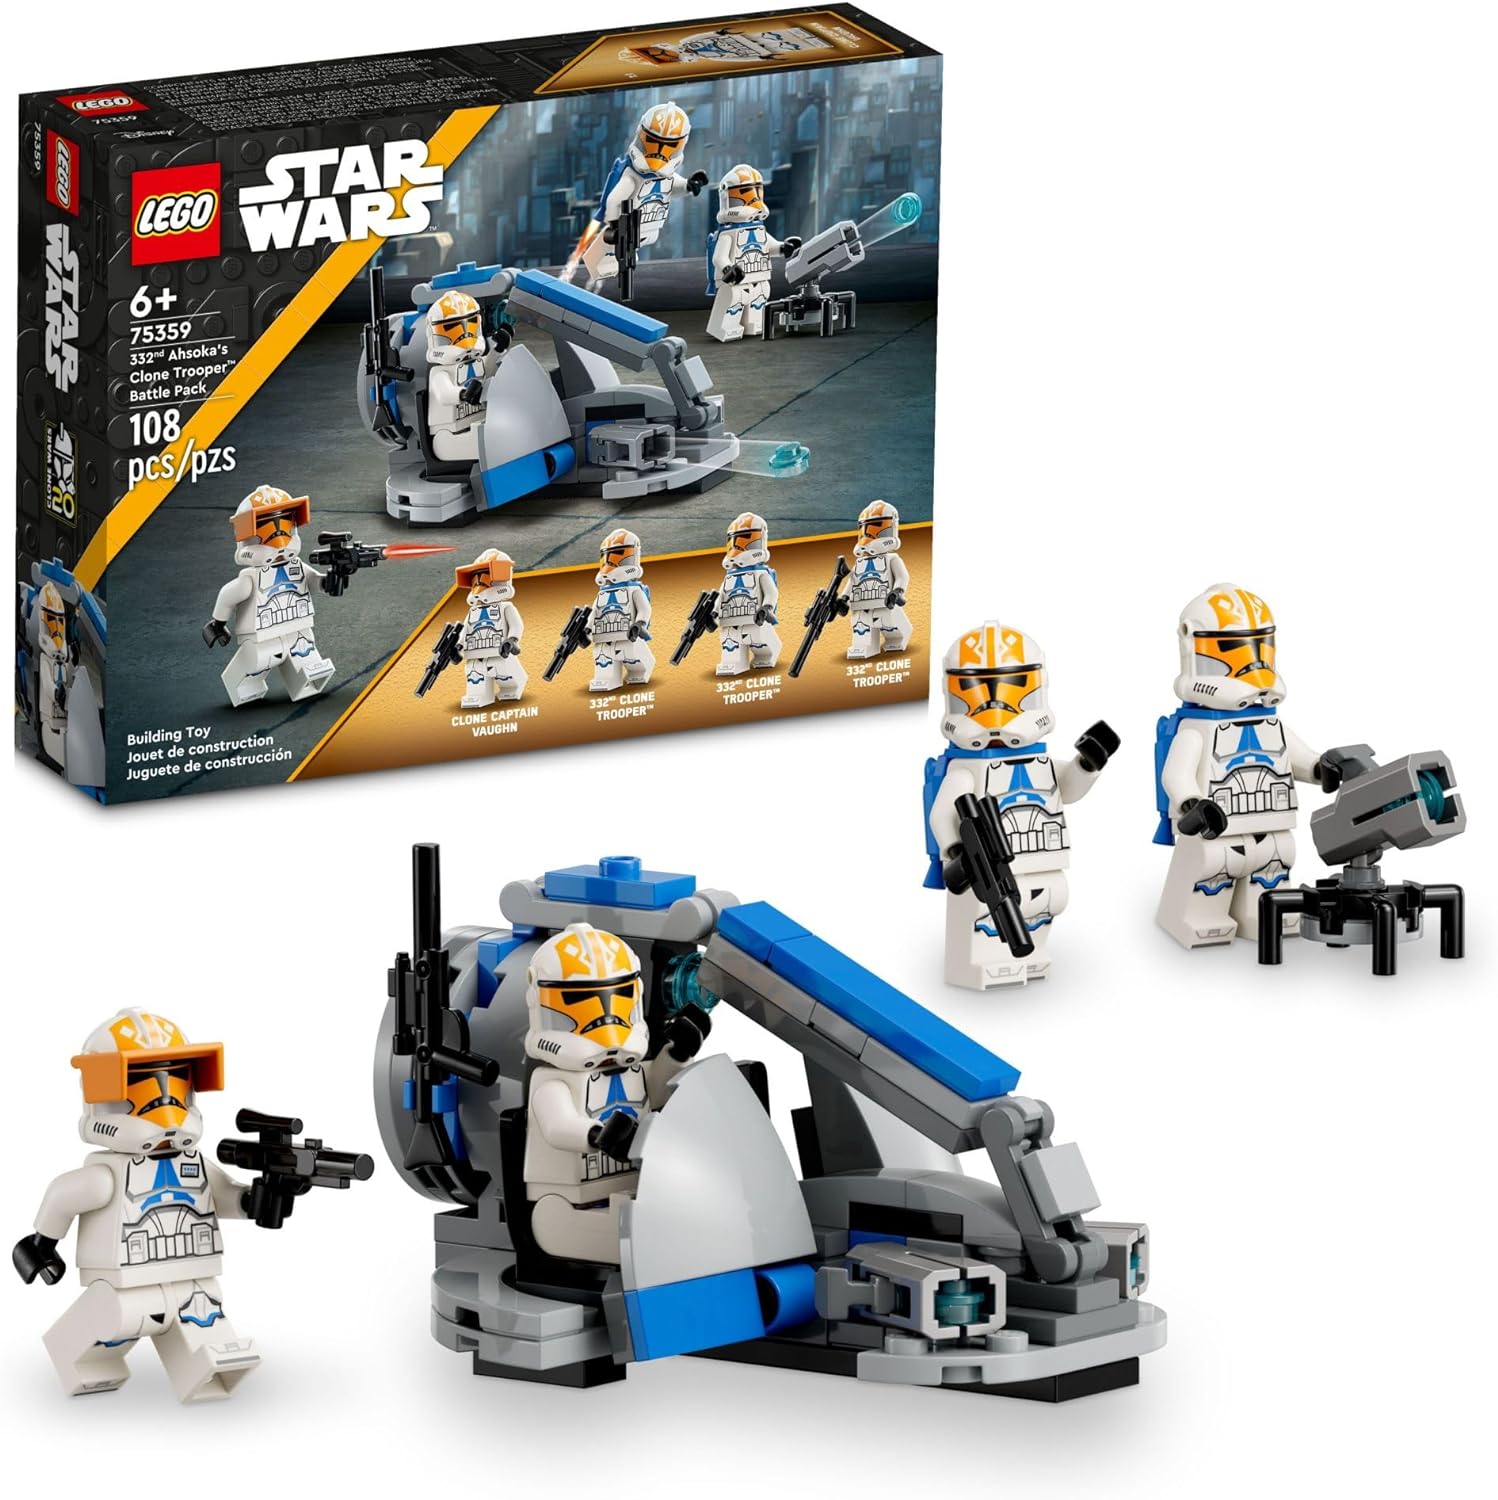 Lego Star Wars 332nd Ahsoka’…